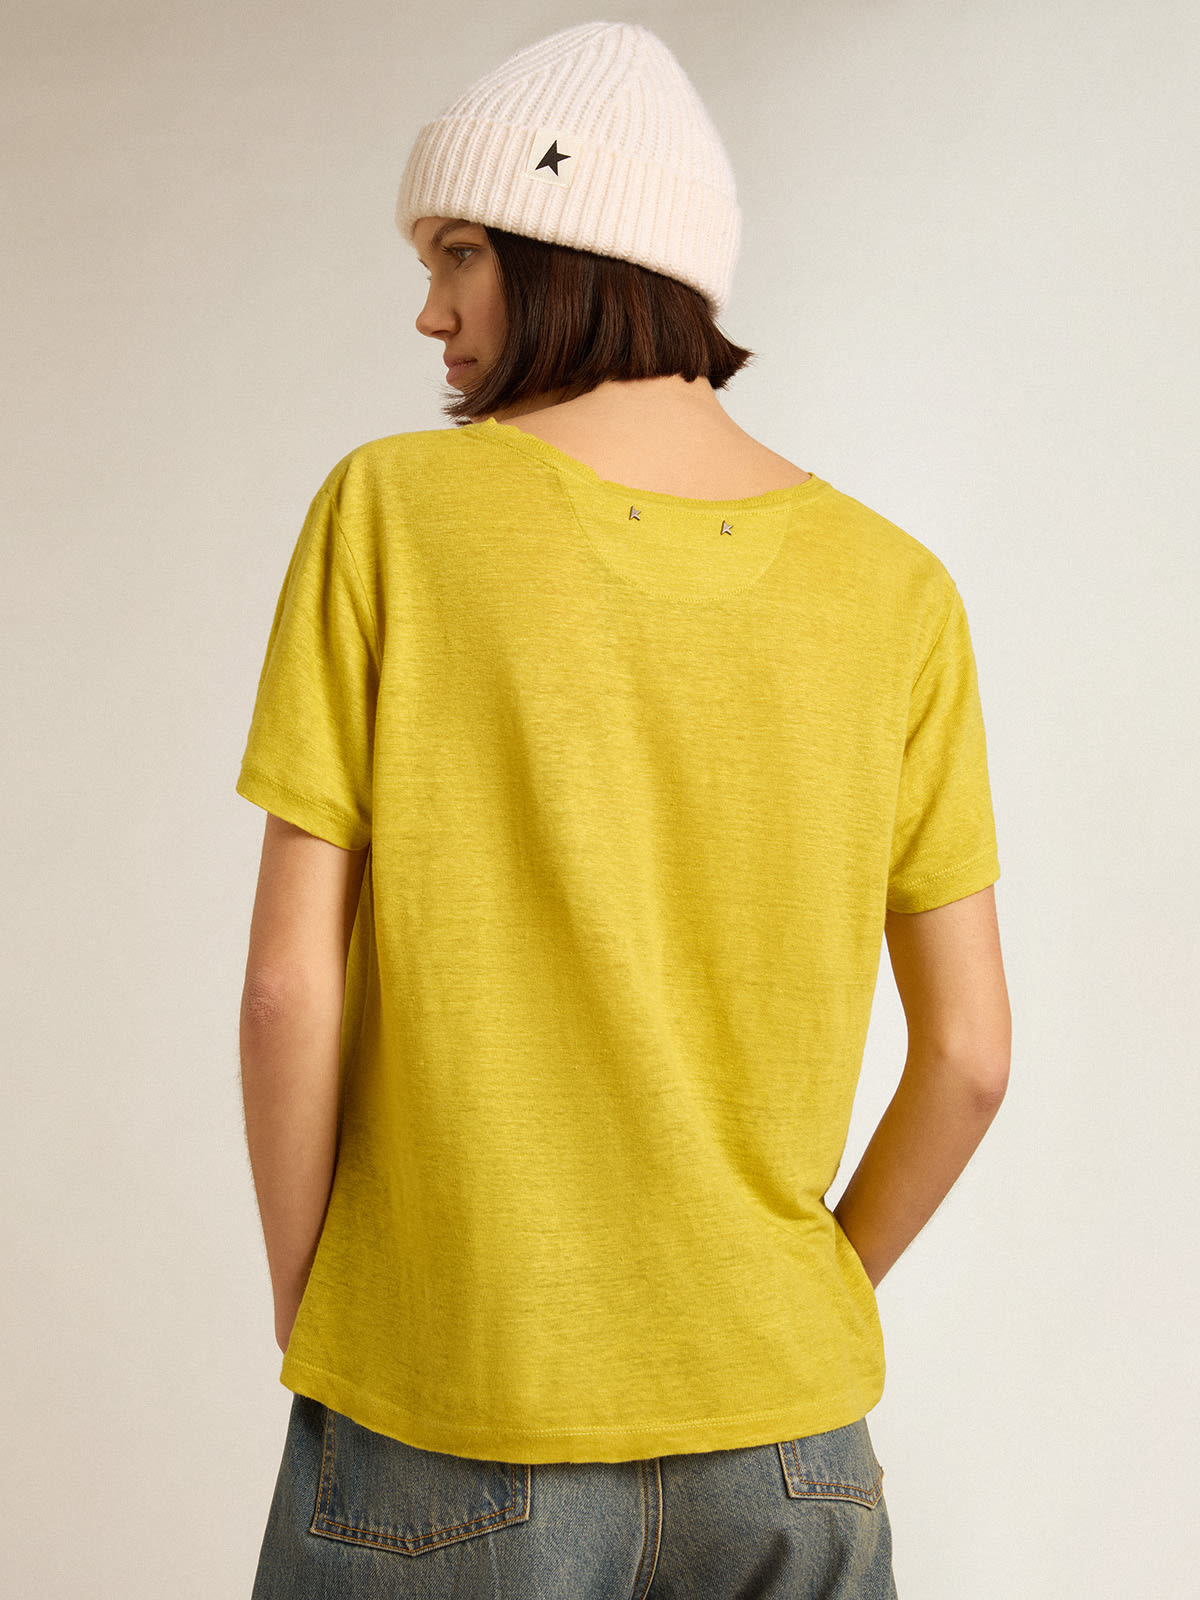 Golden Goose - Women’s T-shirt in maize-yellow linen in 